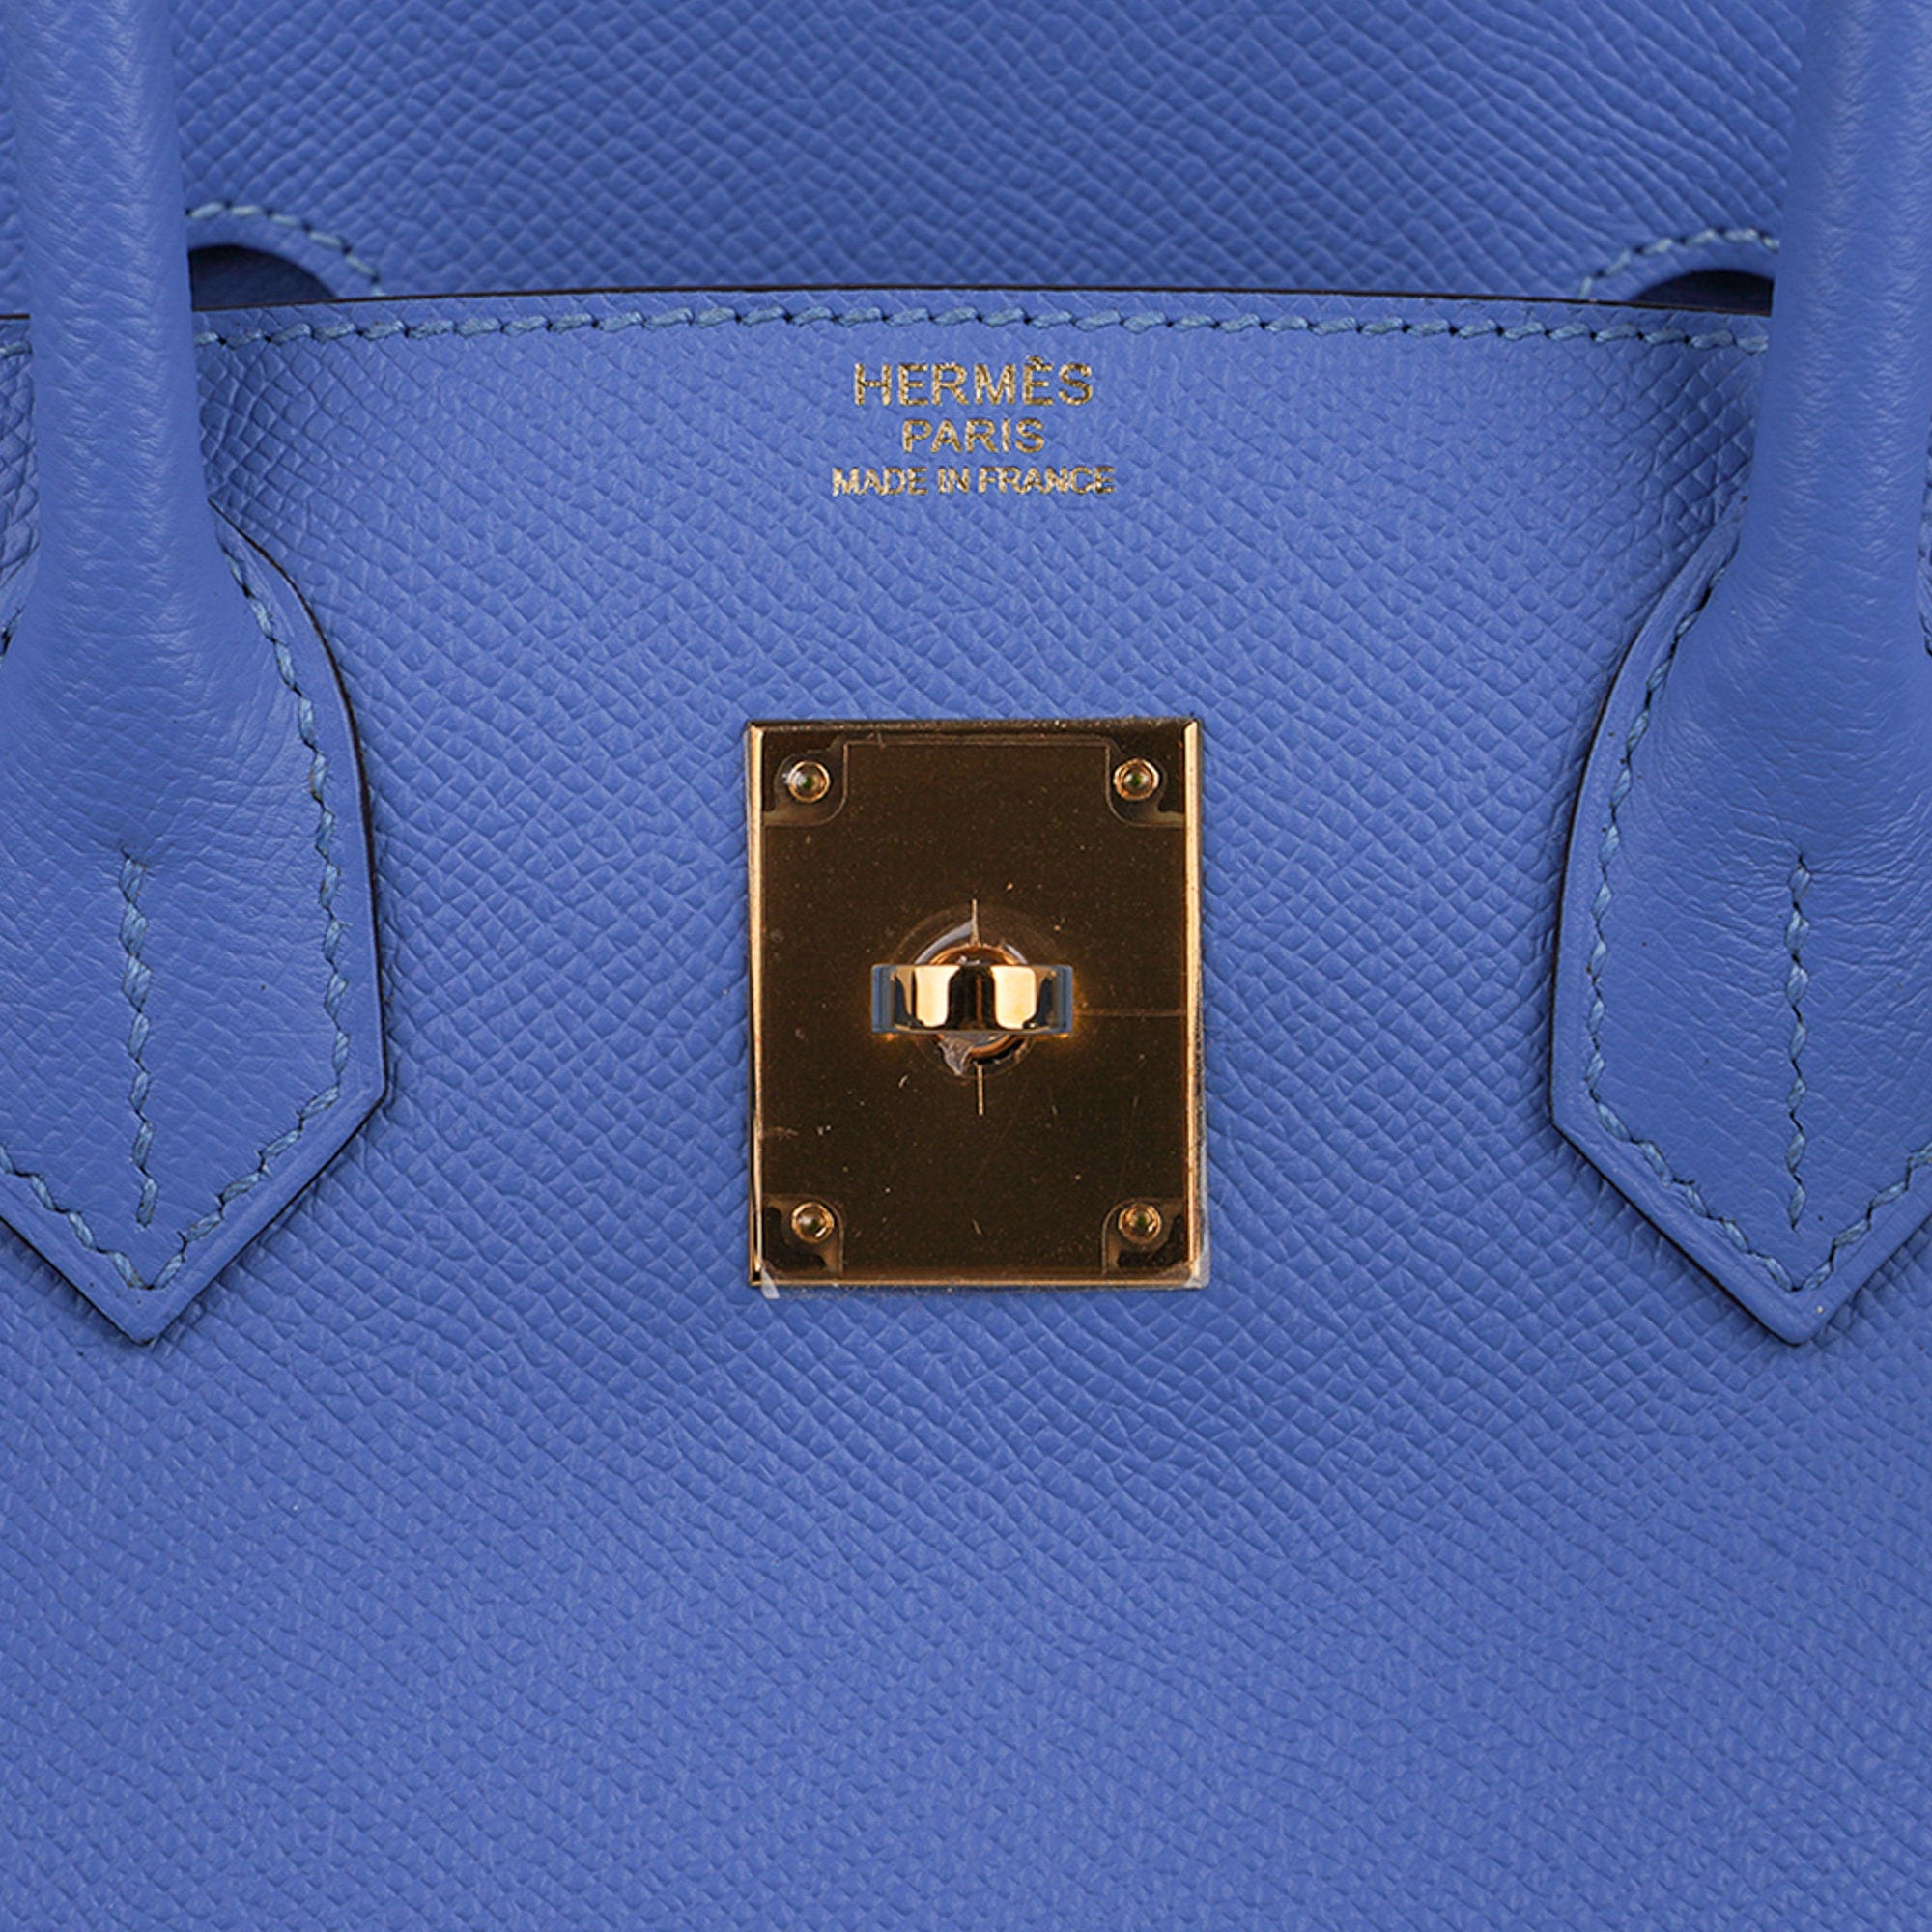 Hermès Birkin Handbag 397300